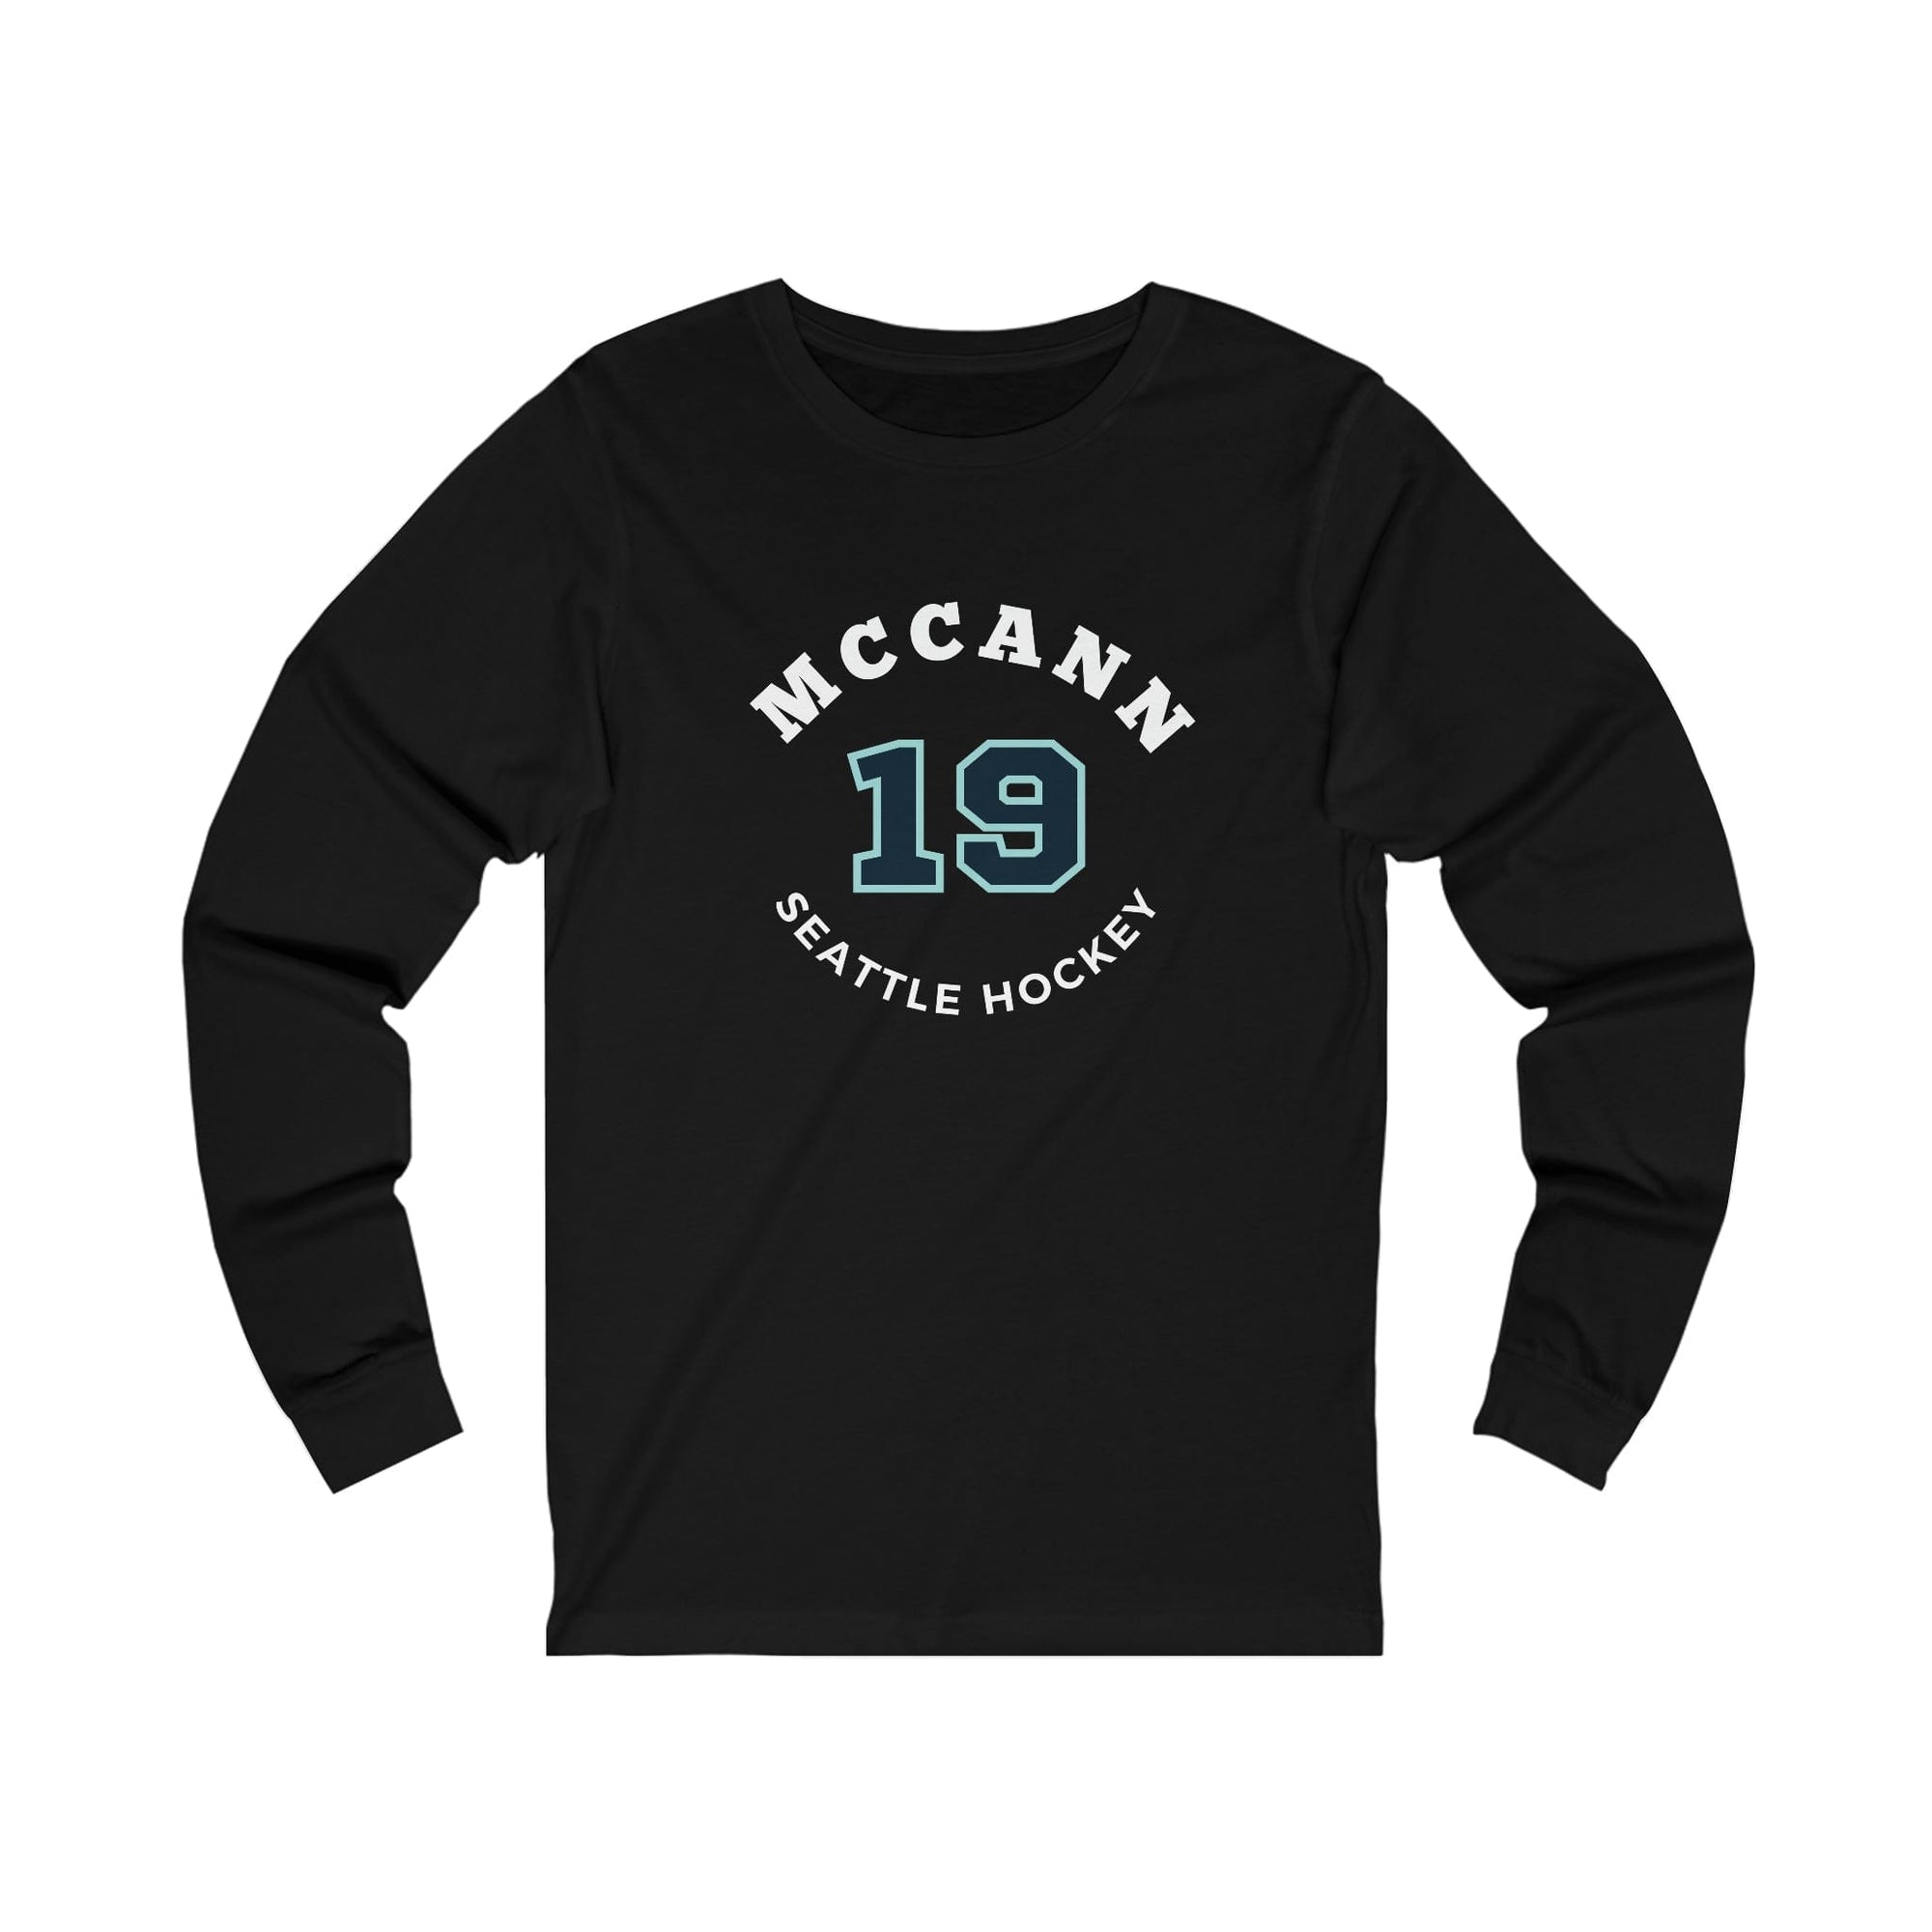 Long-sleeve McCann 19 Seattle Hockey Number Arch Design Unisex Jersey Long Sleeve Shirt